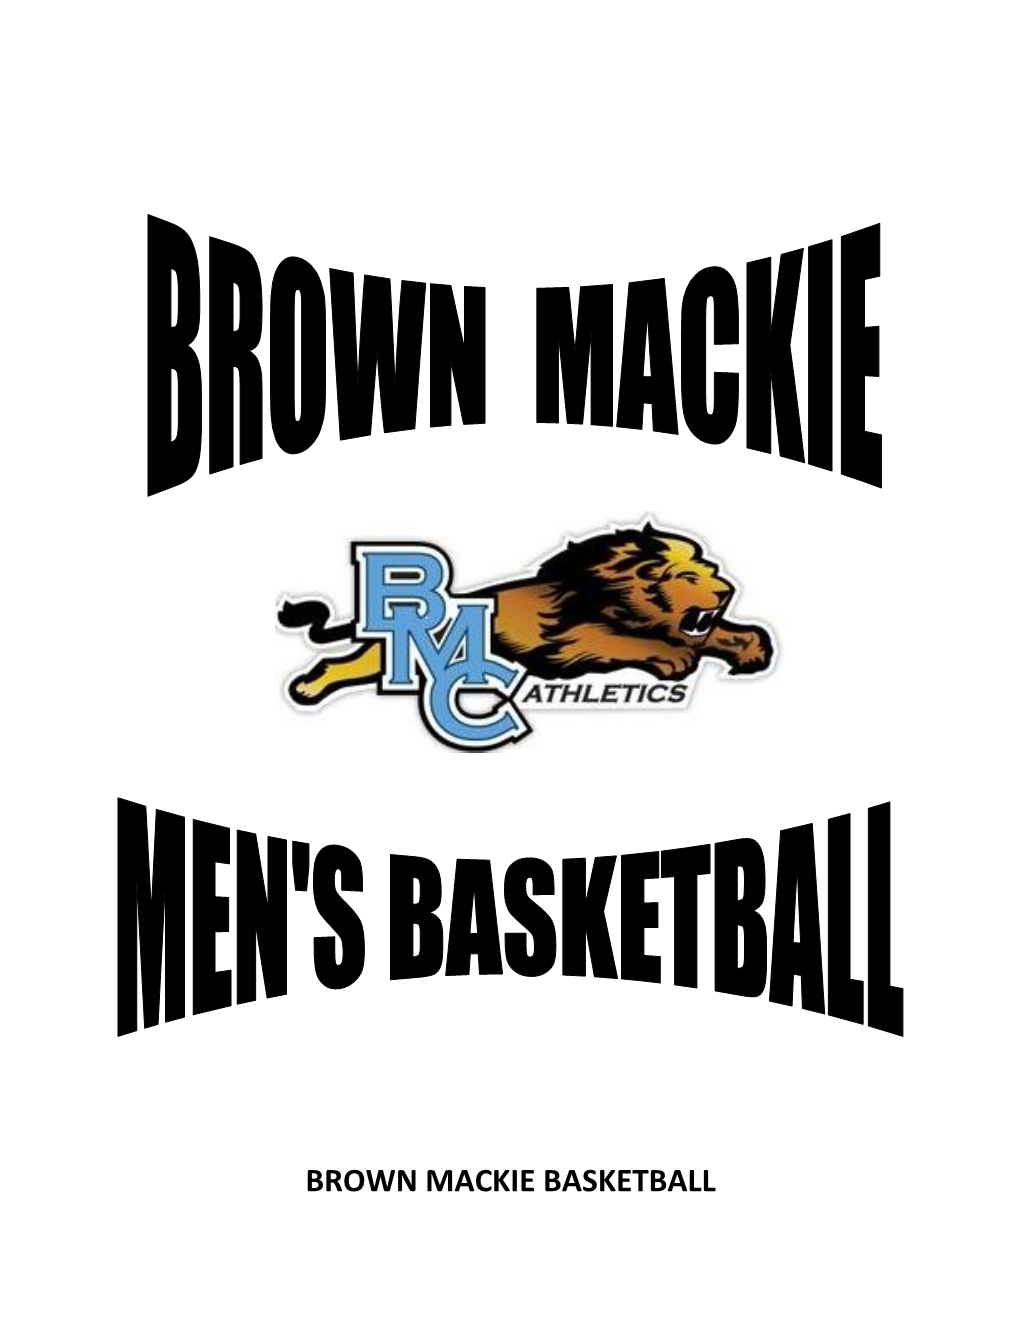 Brown Mackie Basketball